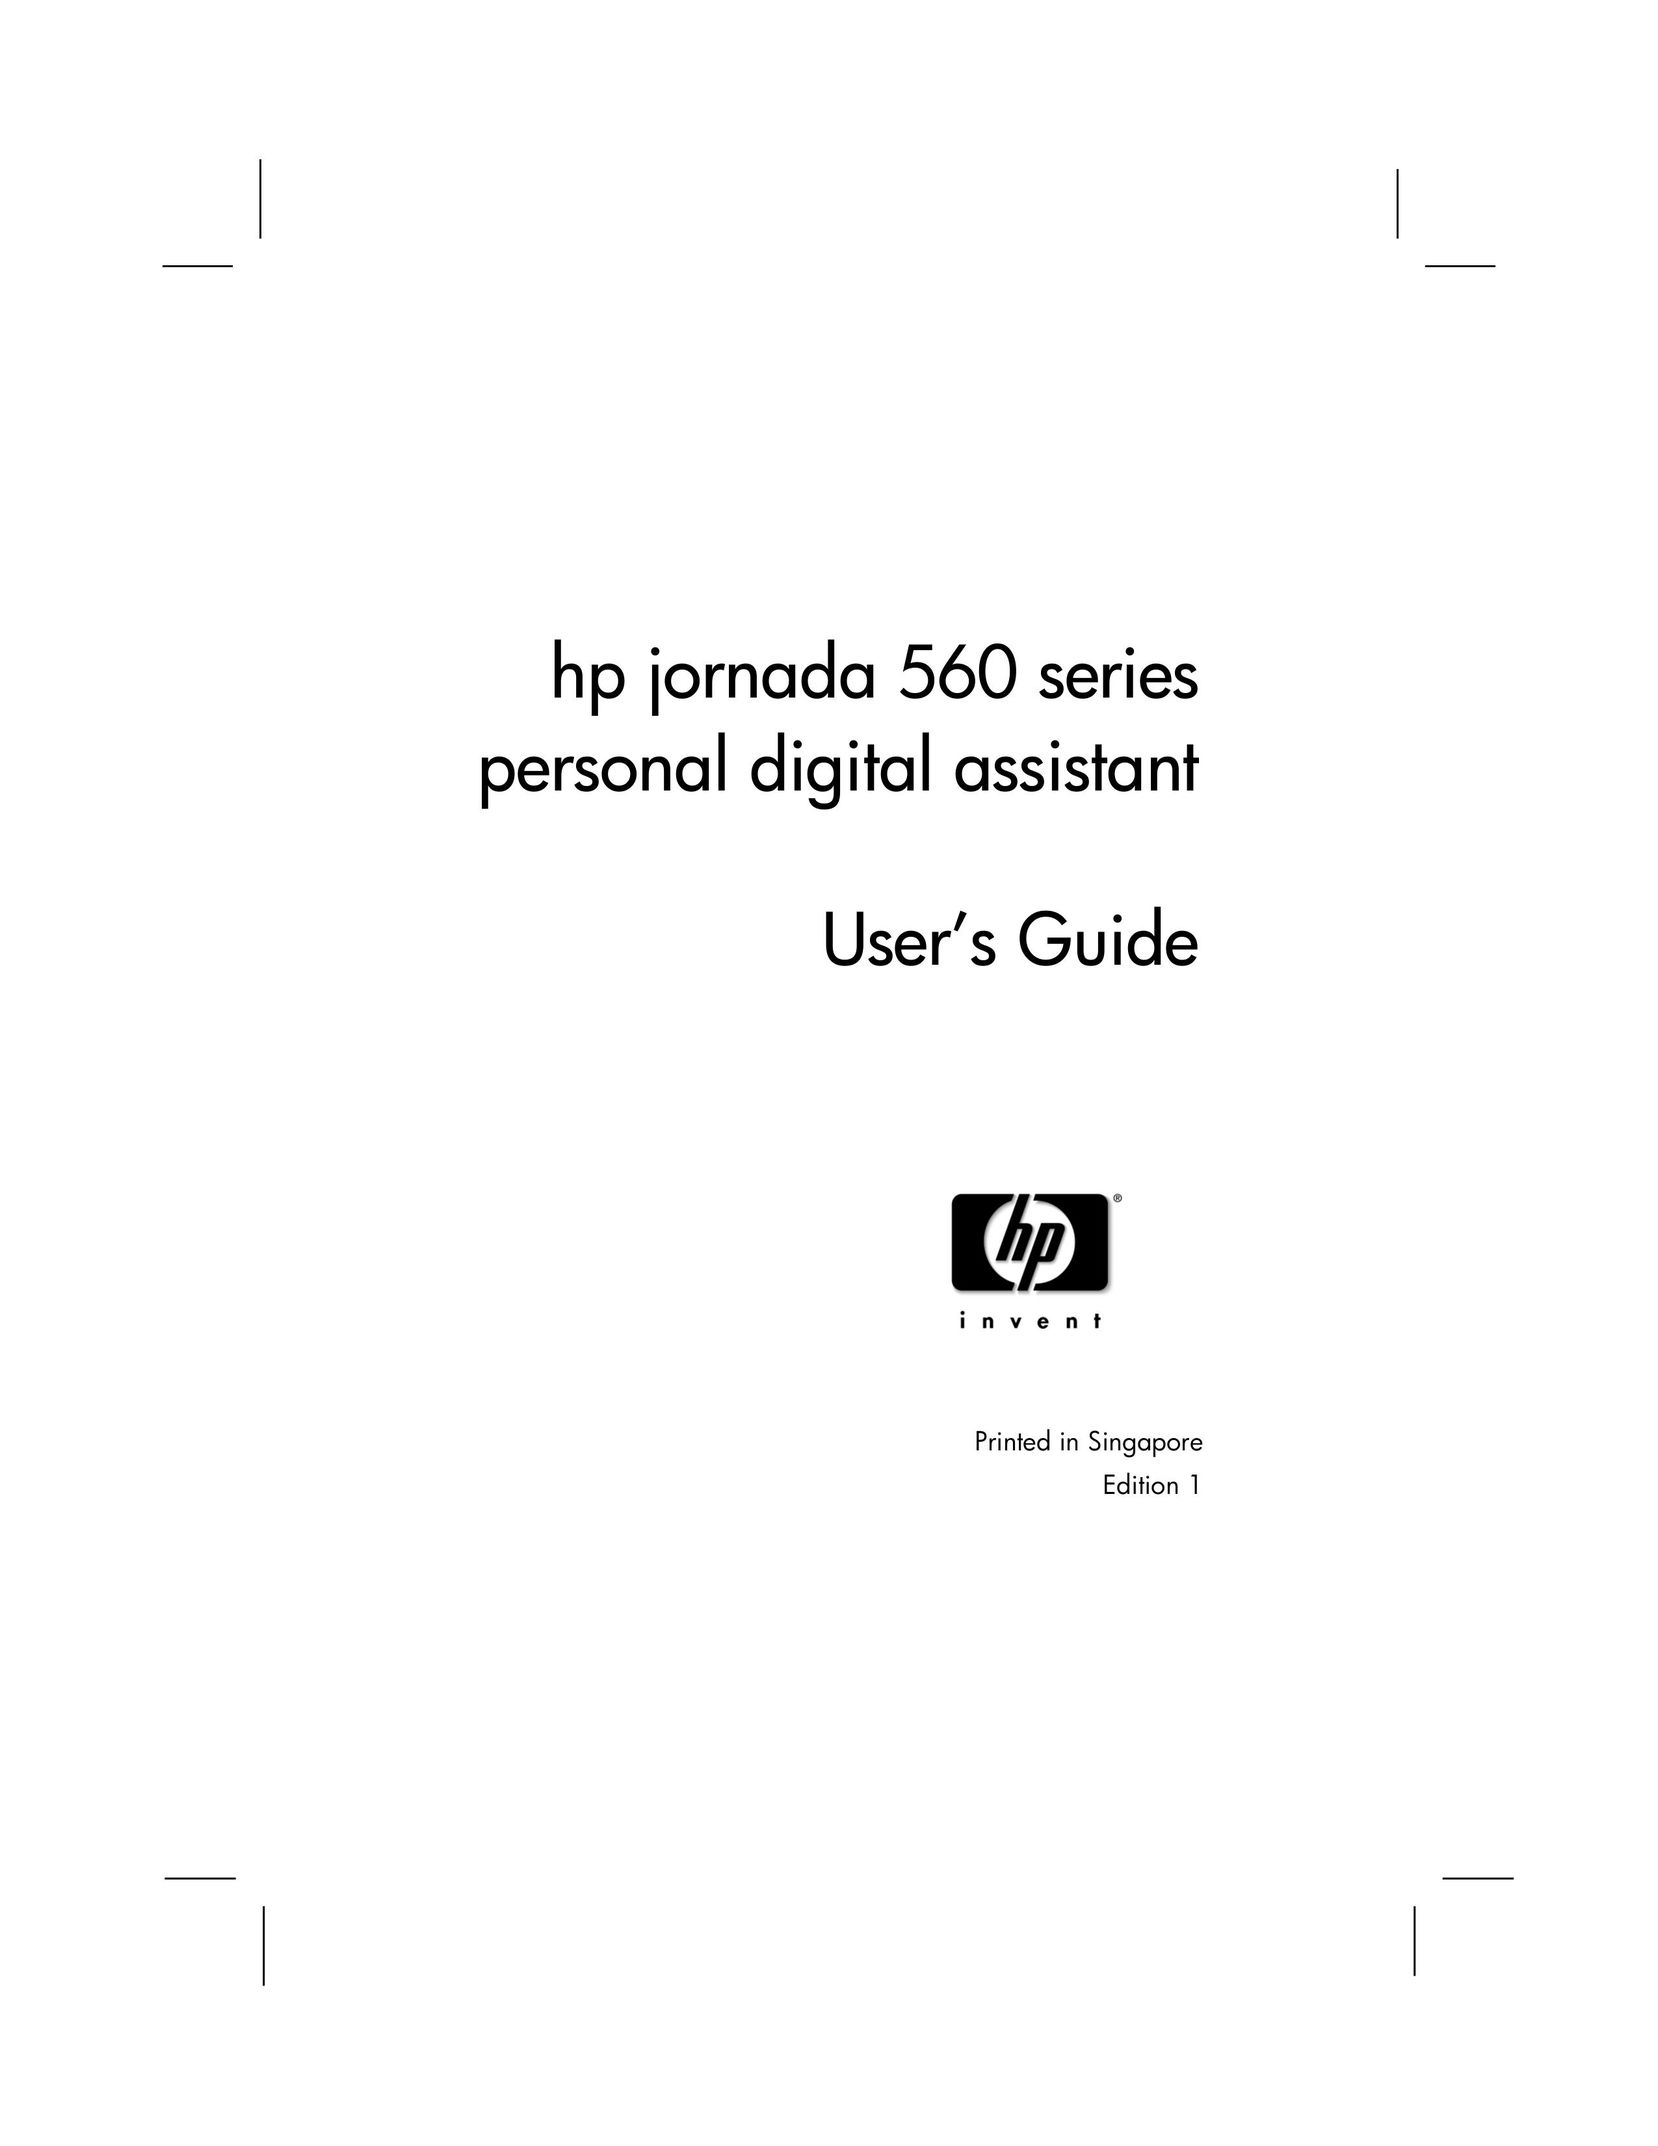 HP (Hewlett-Packard) 560 Series Personal Computer User Manual